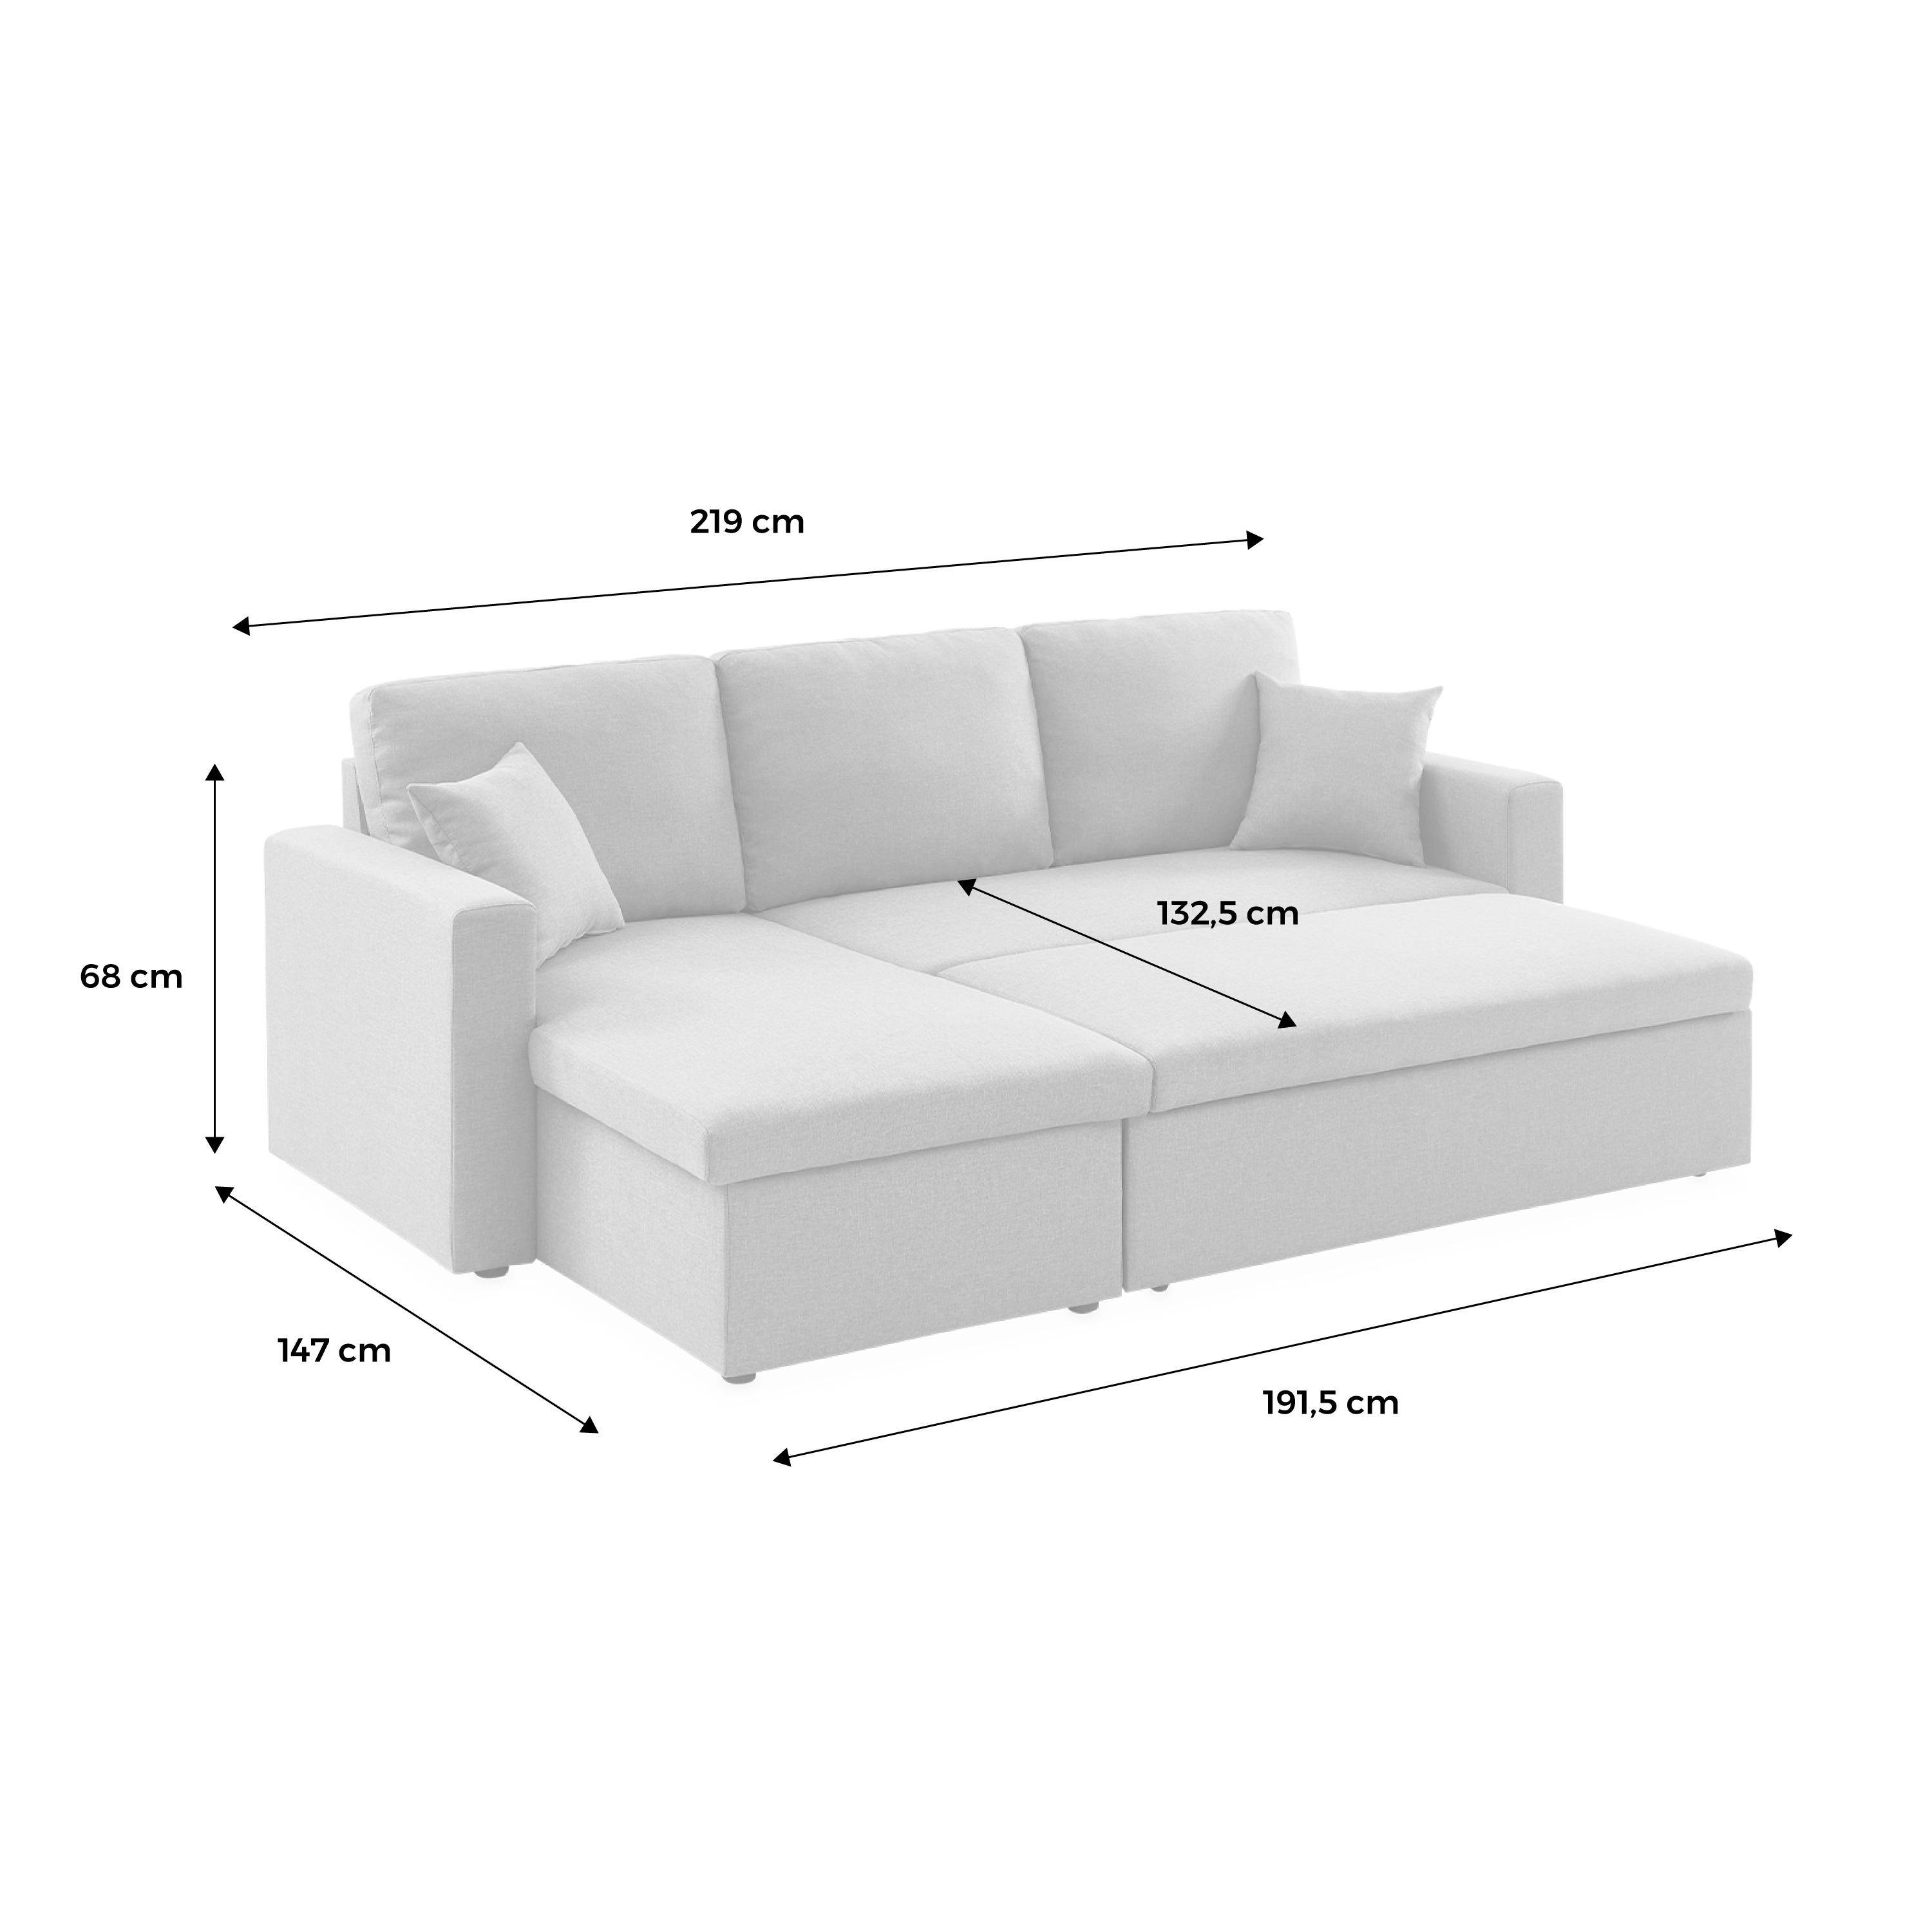 3-seater reversible brown corner sofa bed with storage box, brown, L219xD81xH68cm, IDA,sweeek,Photo11